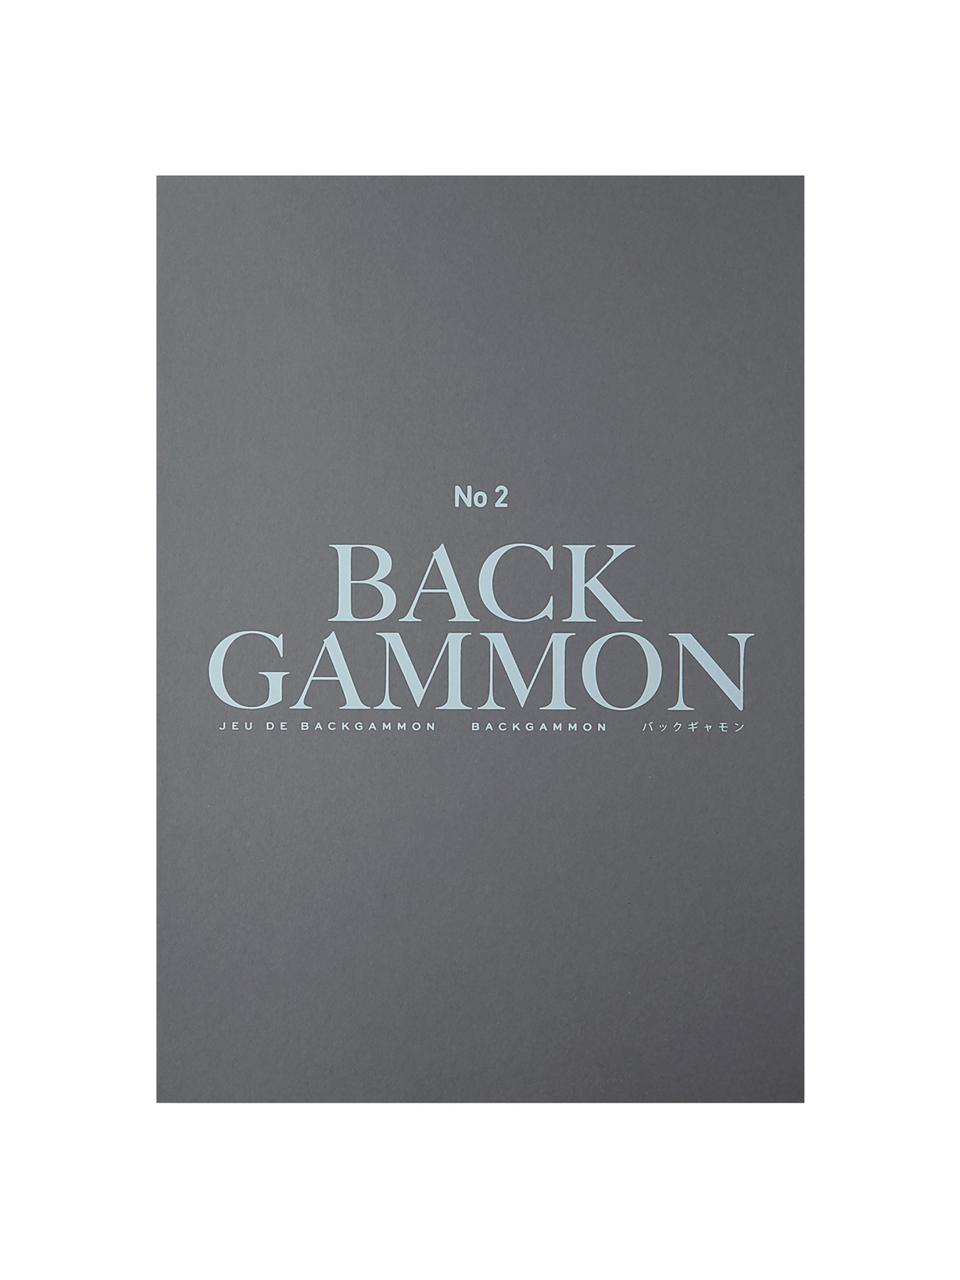 Juego de Backgammon, Papel, acrílico, Gris, negro, turquesa, blanco, Ancho 31 x Alto 5 cm